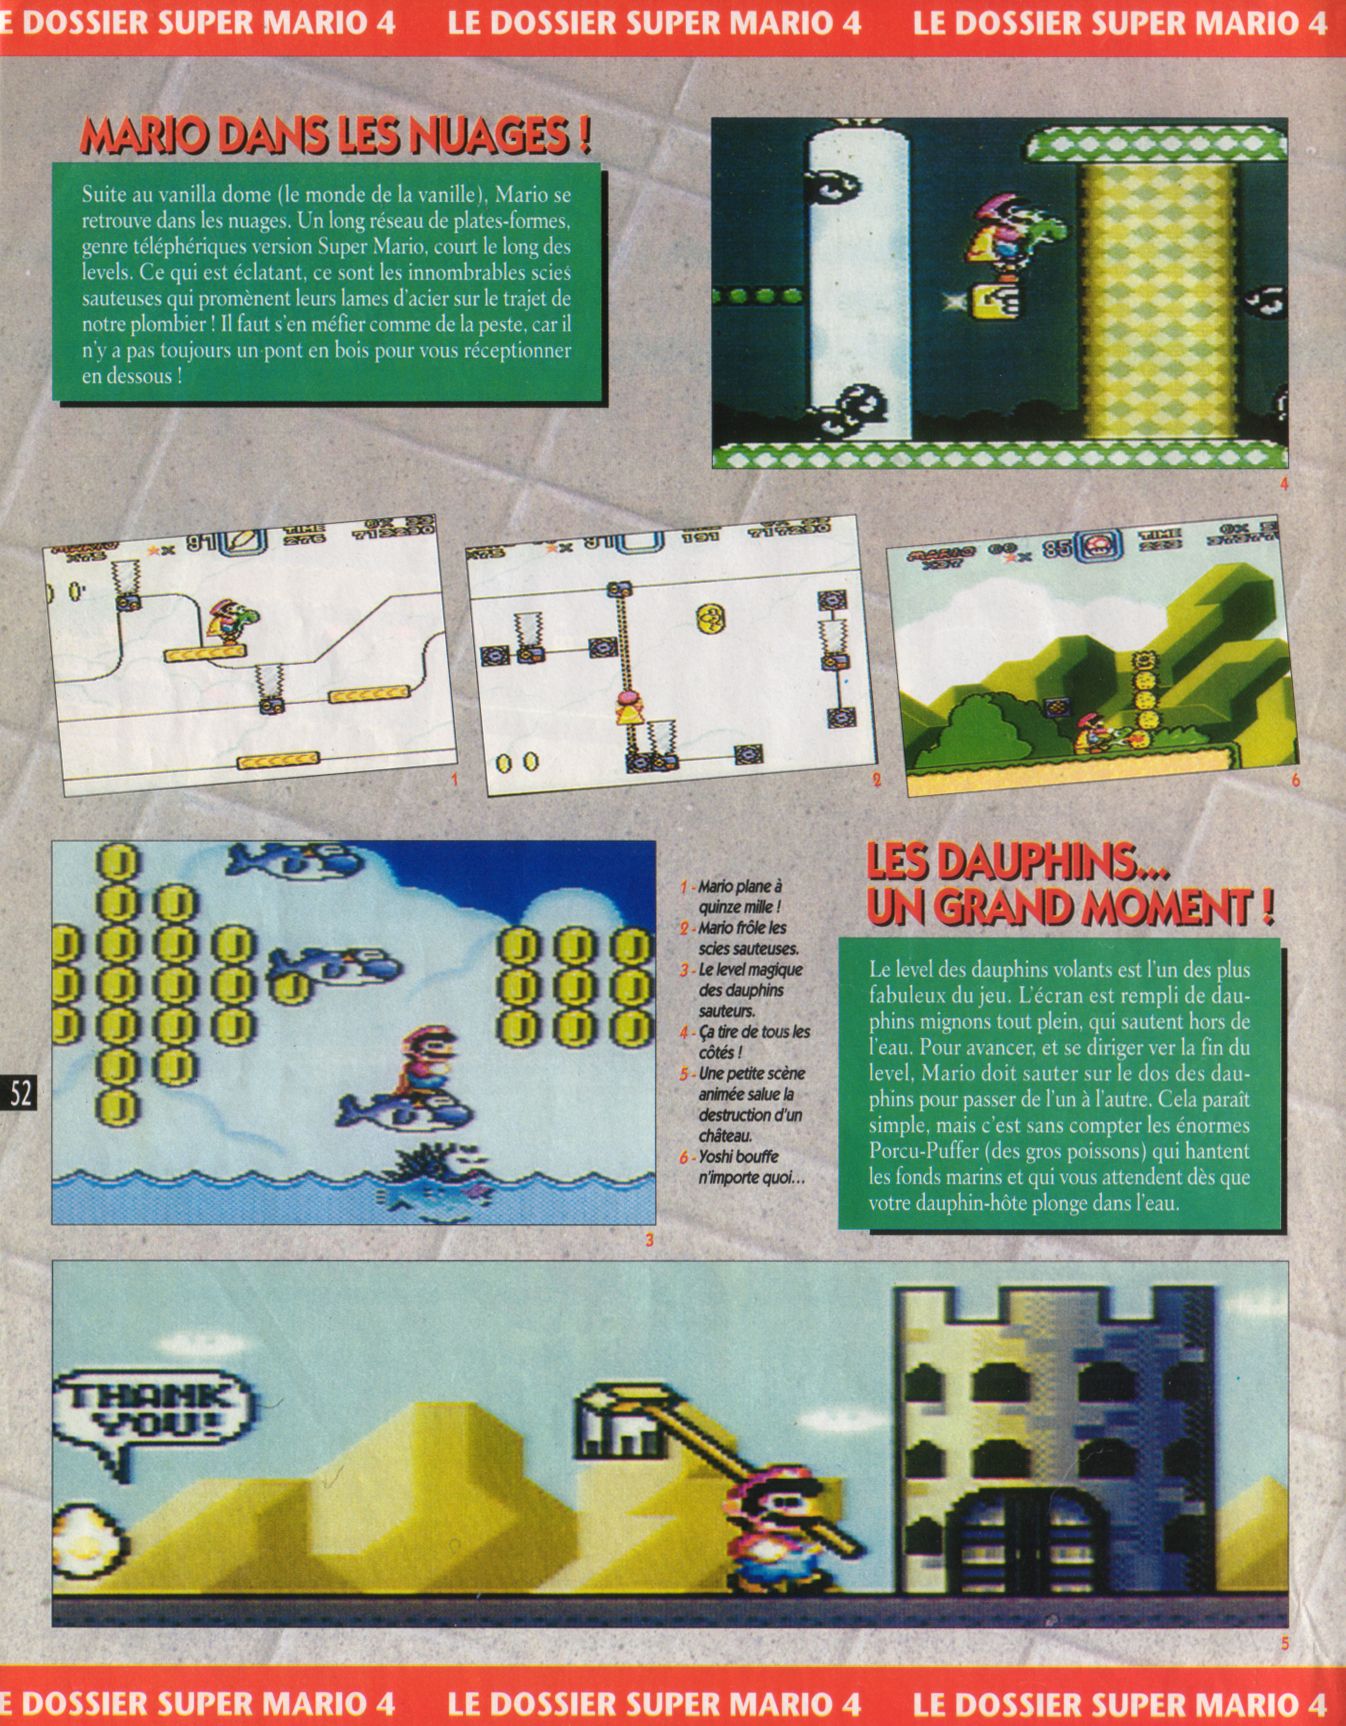 [TEST] Super Mario World (Super Famicom) Player%20One%20019%20-%20Page%20052%20%281992-04%29